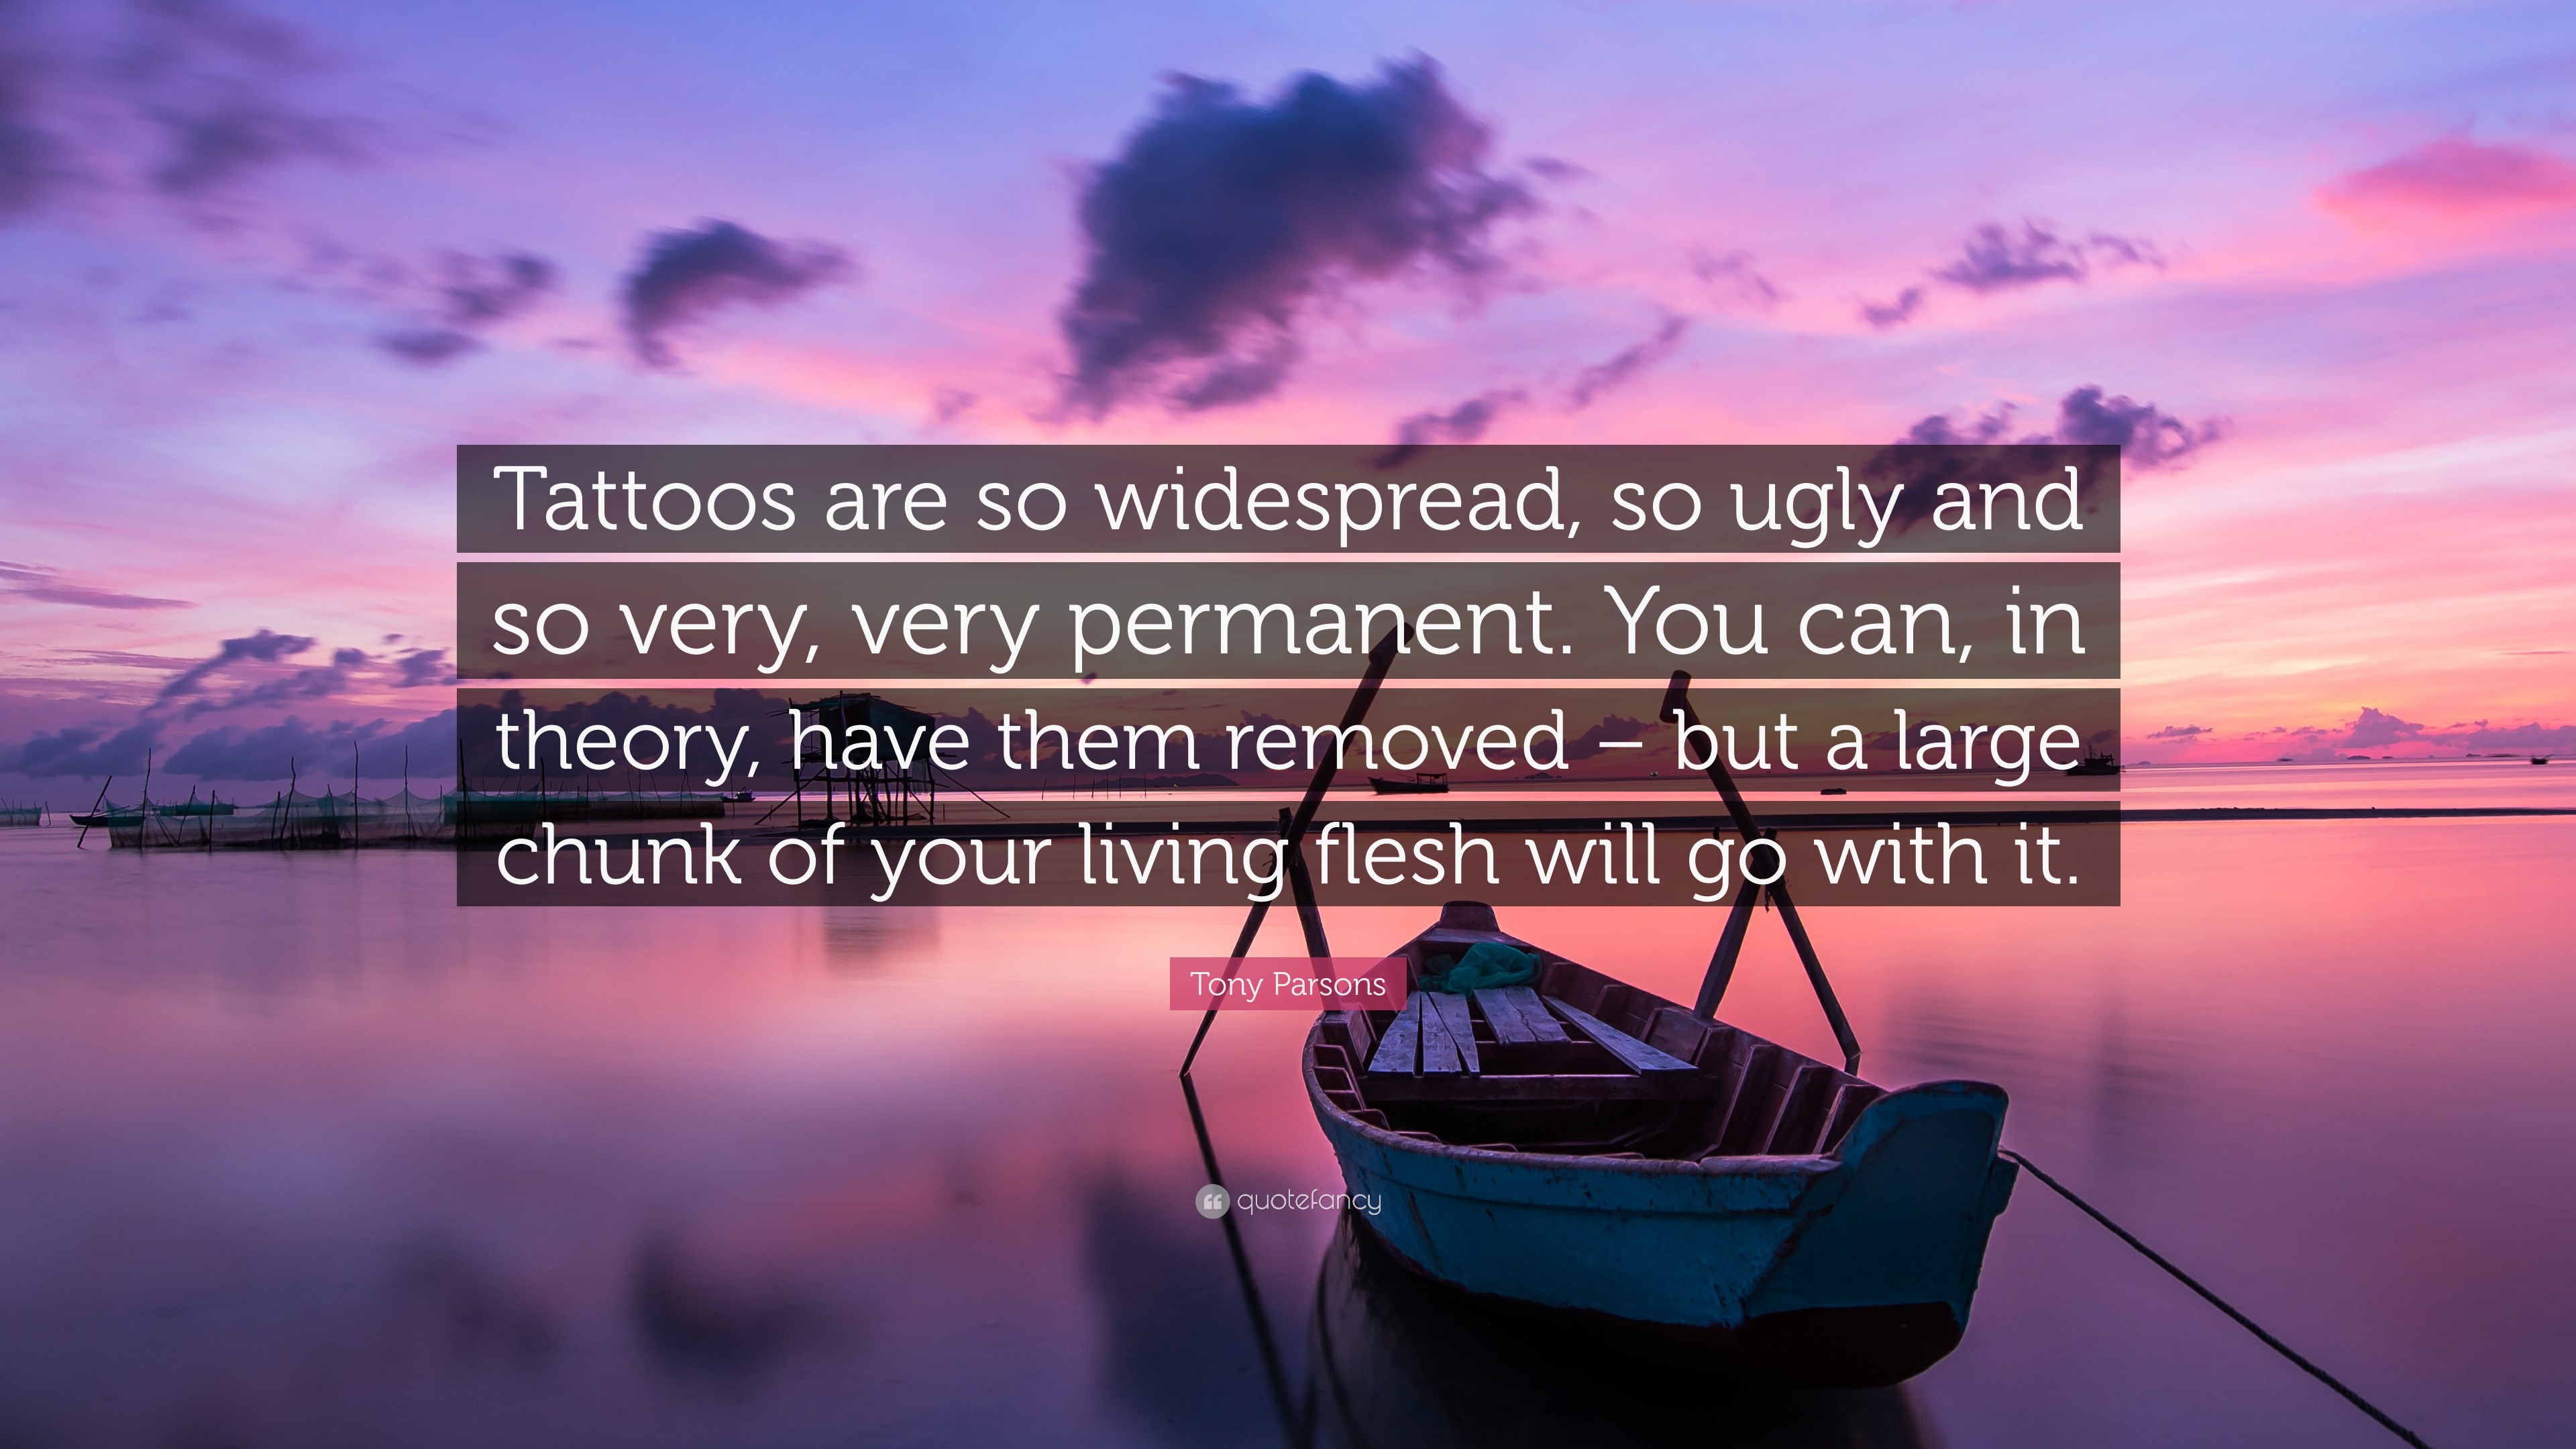 Getting A Permanent Tattoo?